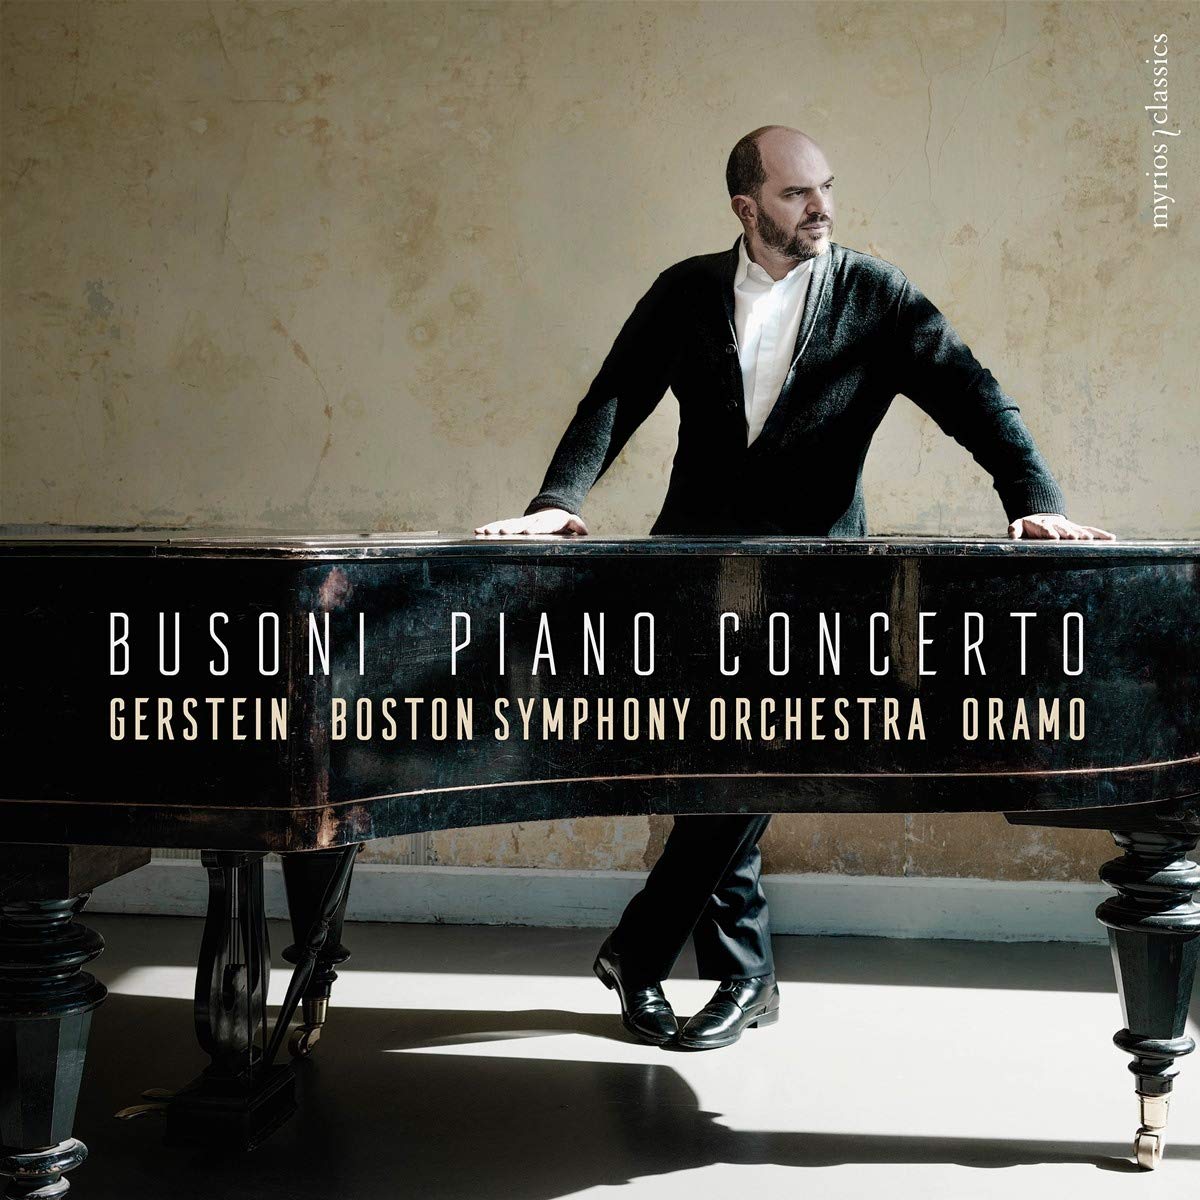 <p>Busoni Piano Concerto<br />
Sakari Oramo & Boston Symphony Orchestra</p>